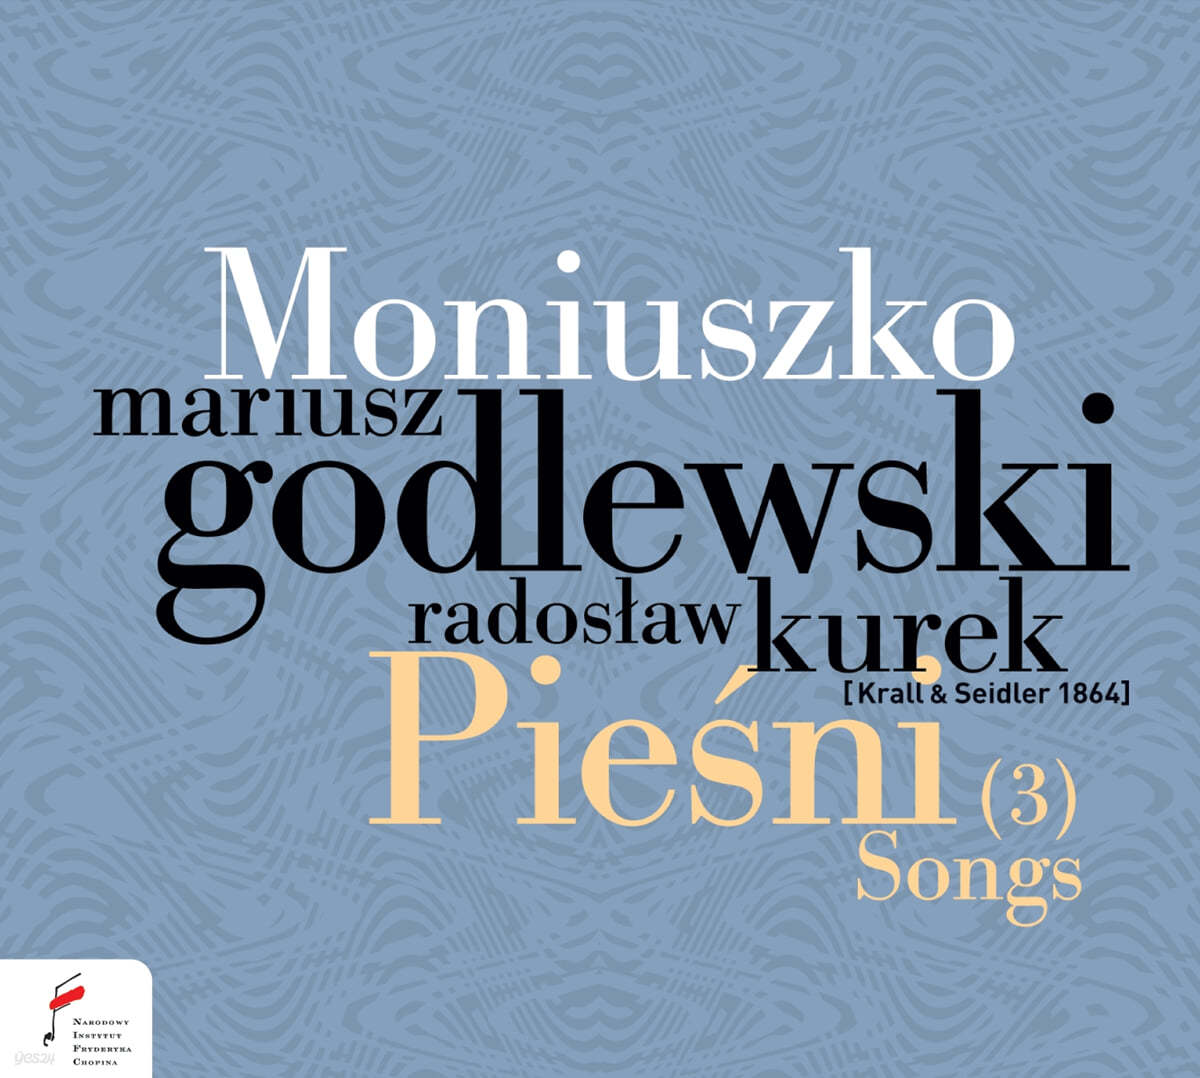 Mariusz Godlewski 모니우슈코: 가곡집 (Moniuszko: Songs)